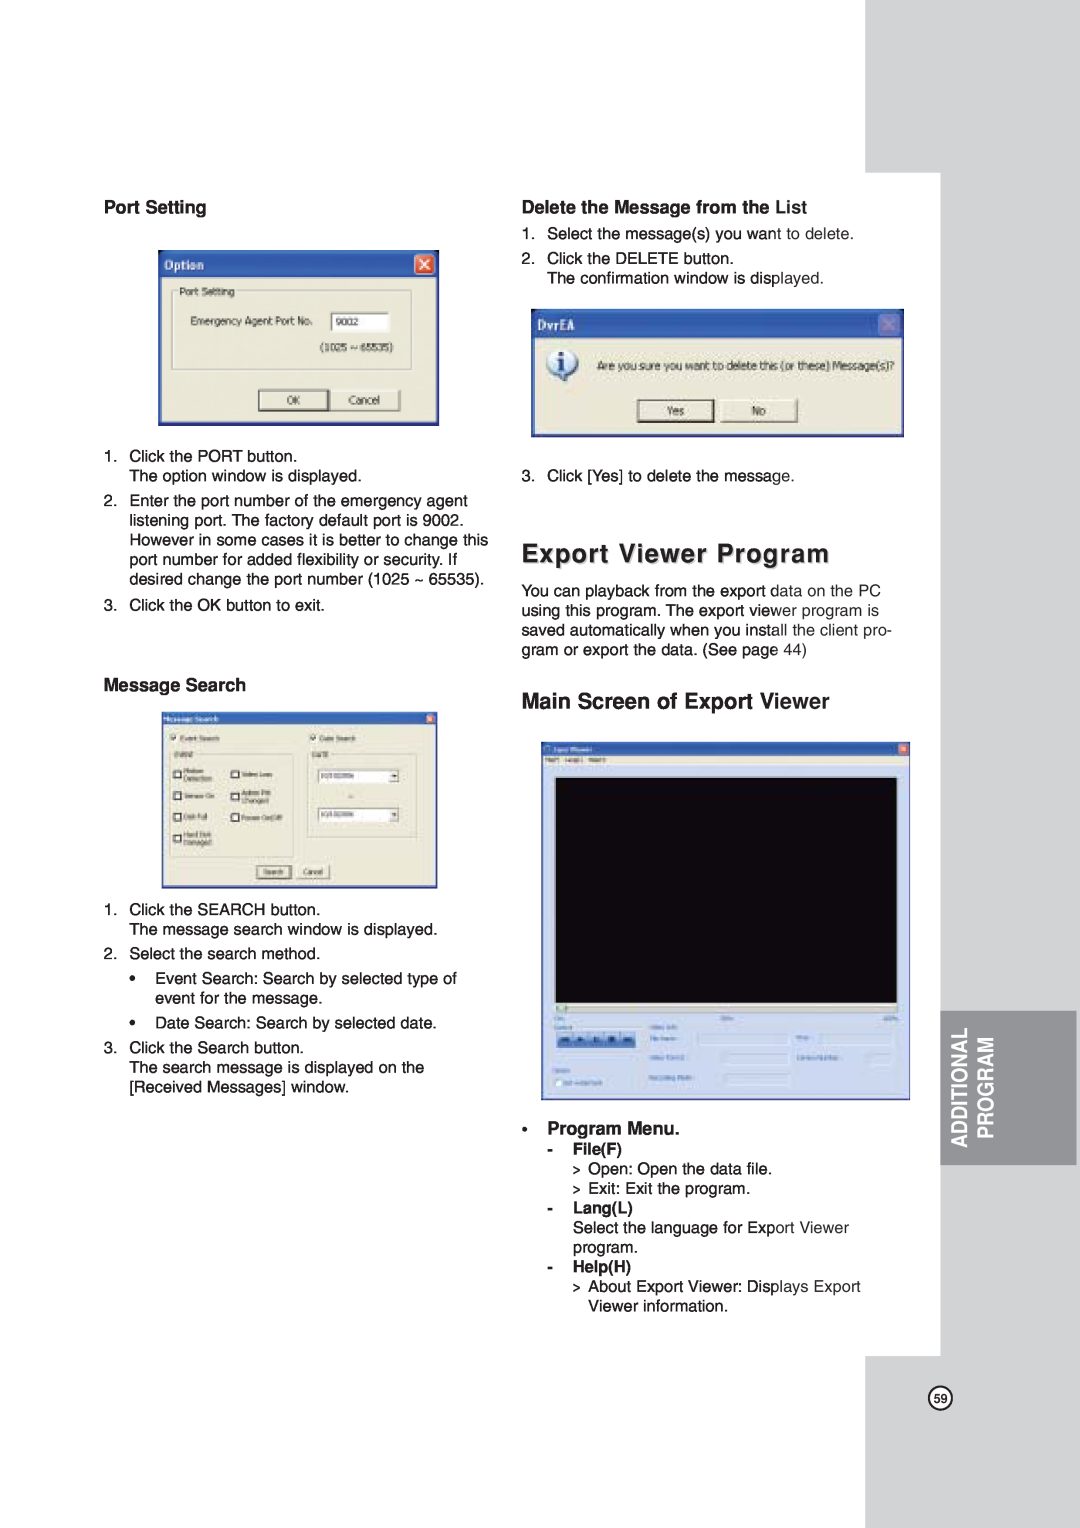 LG Electronics LDV-S503 Export Viewer Program, Main Screen of Export Viewer, Port Setting, Message Search, Program Menu 